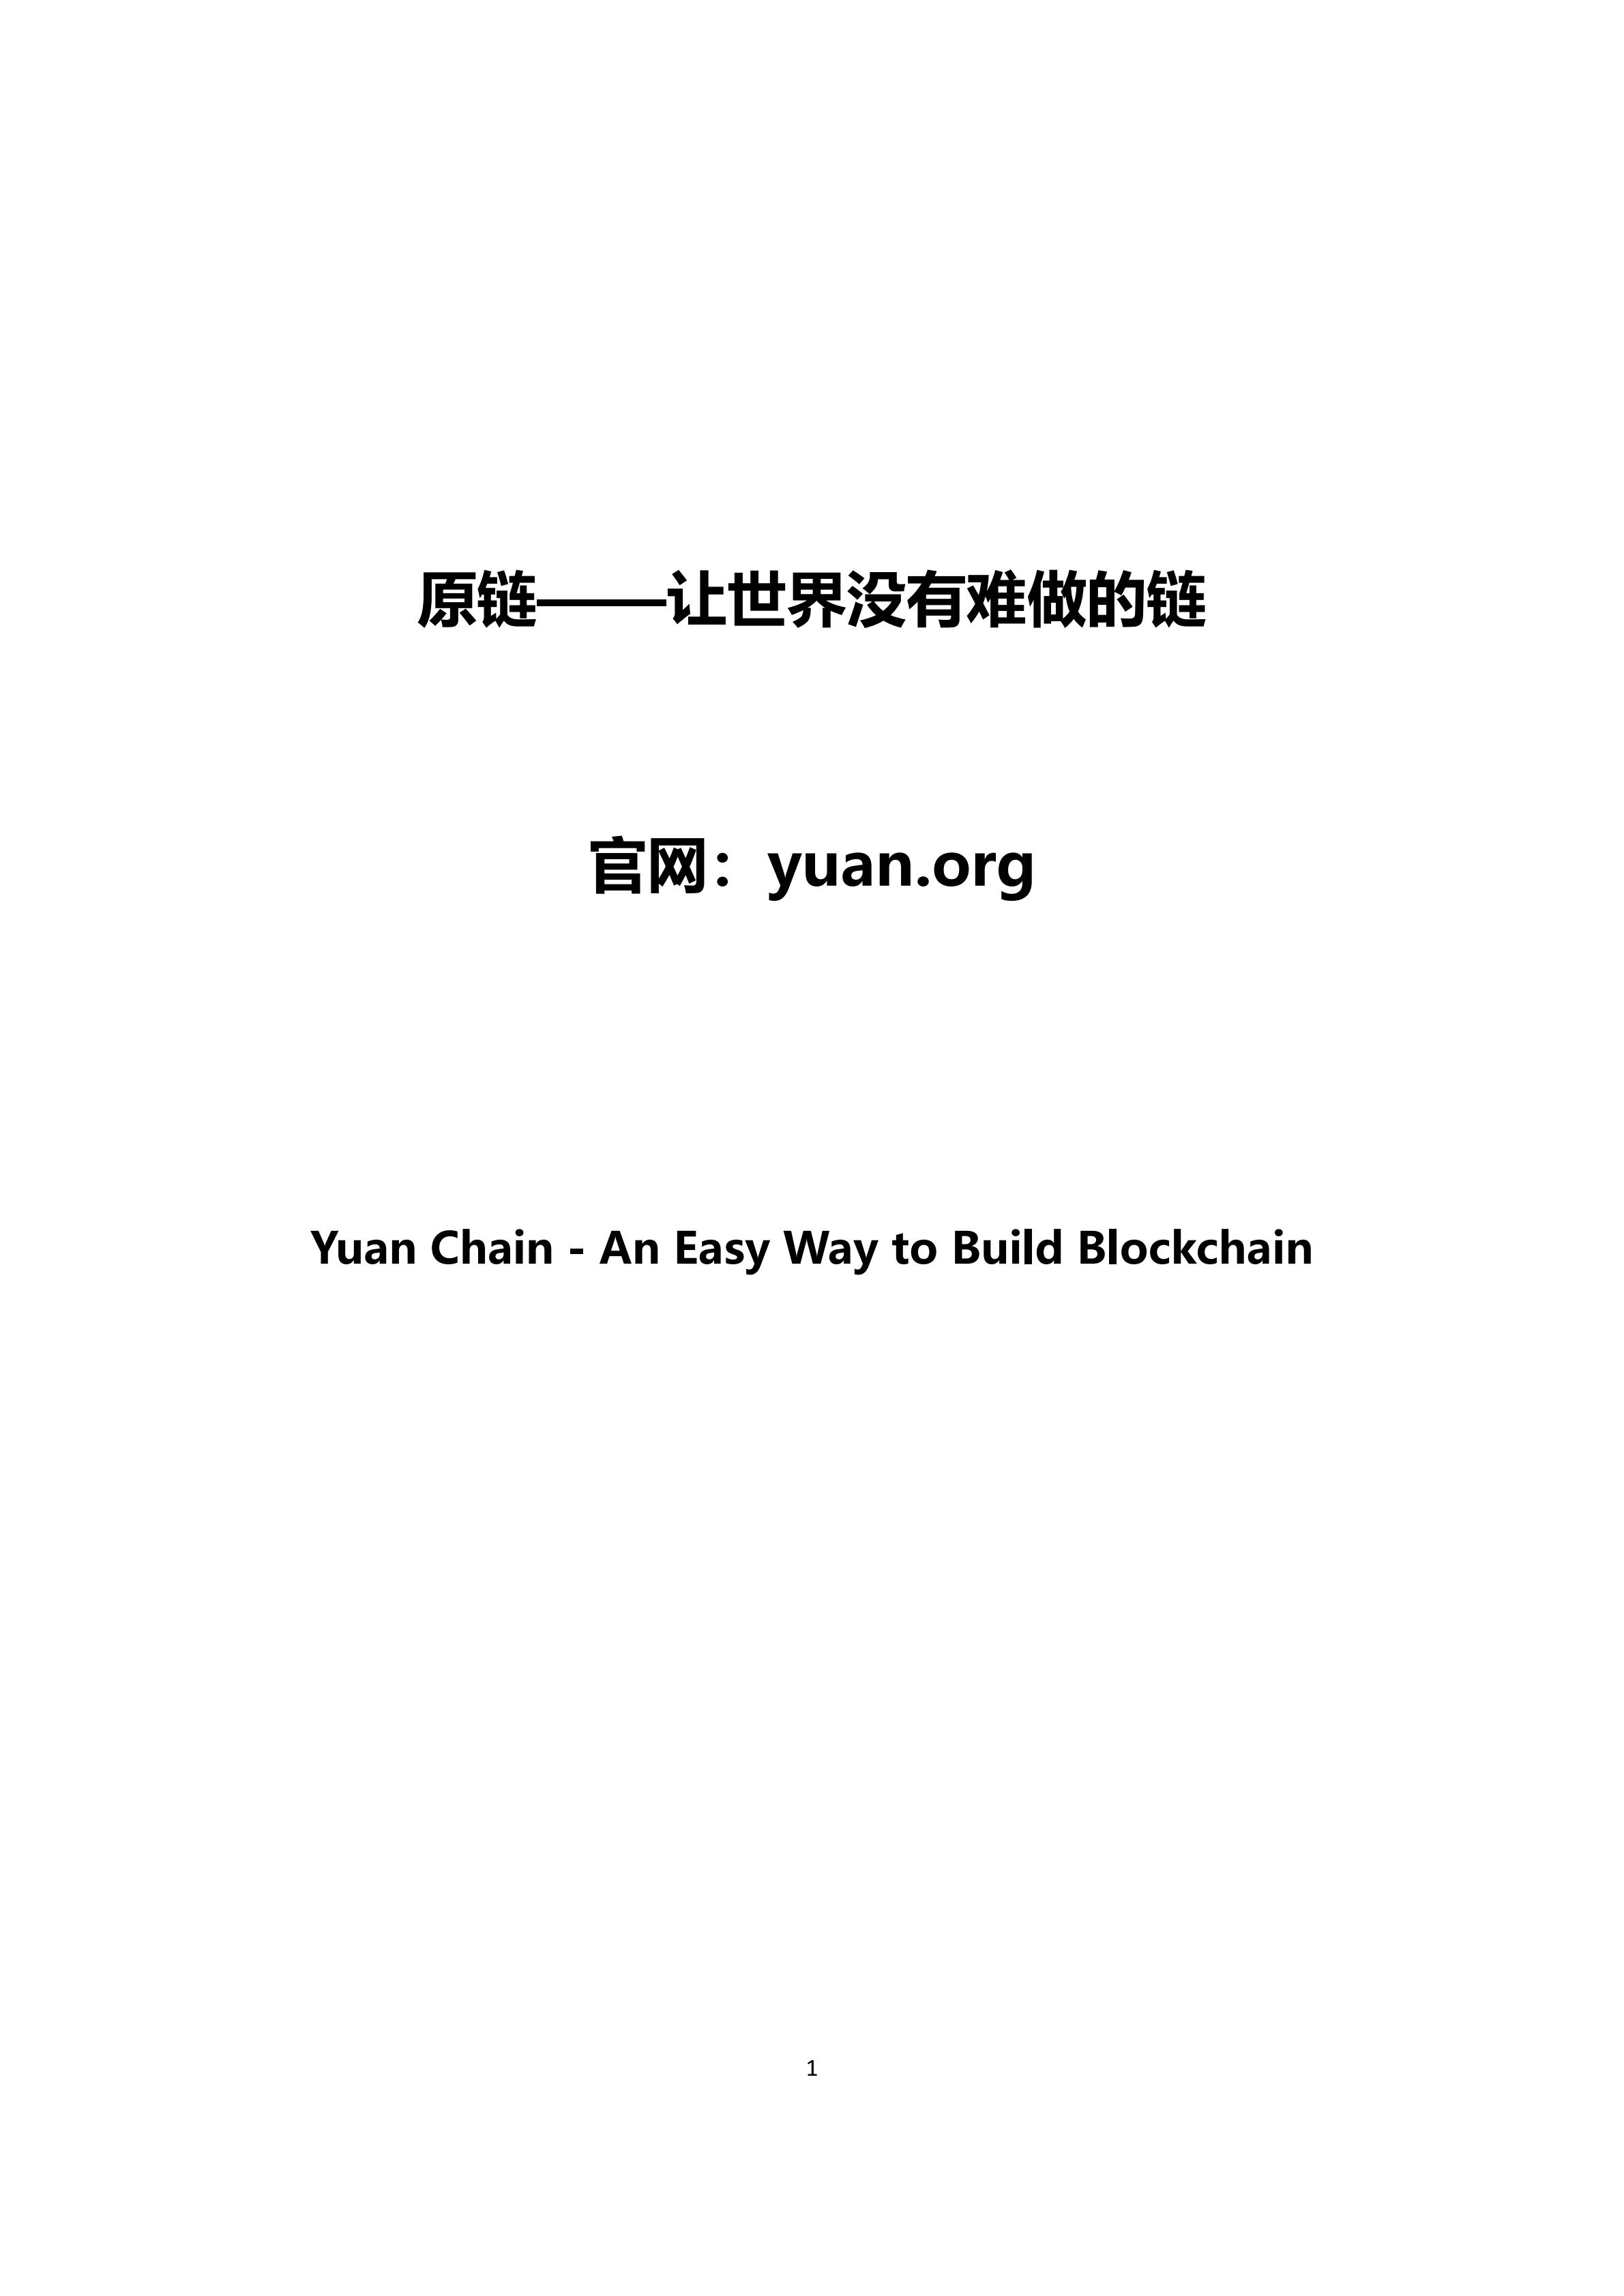 YCC_yuan_introduction_00.jpg